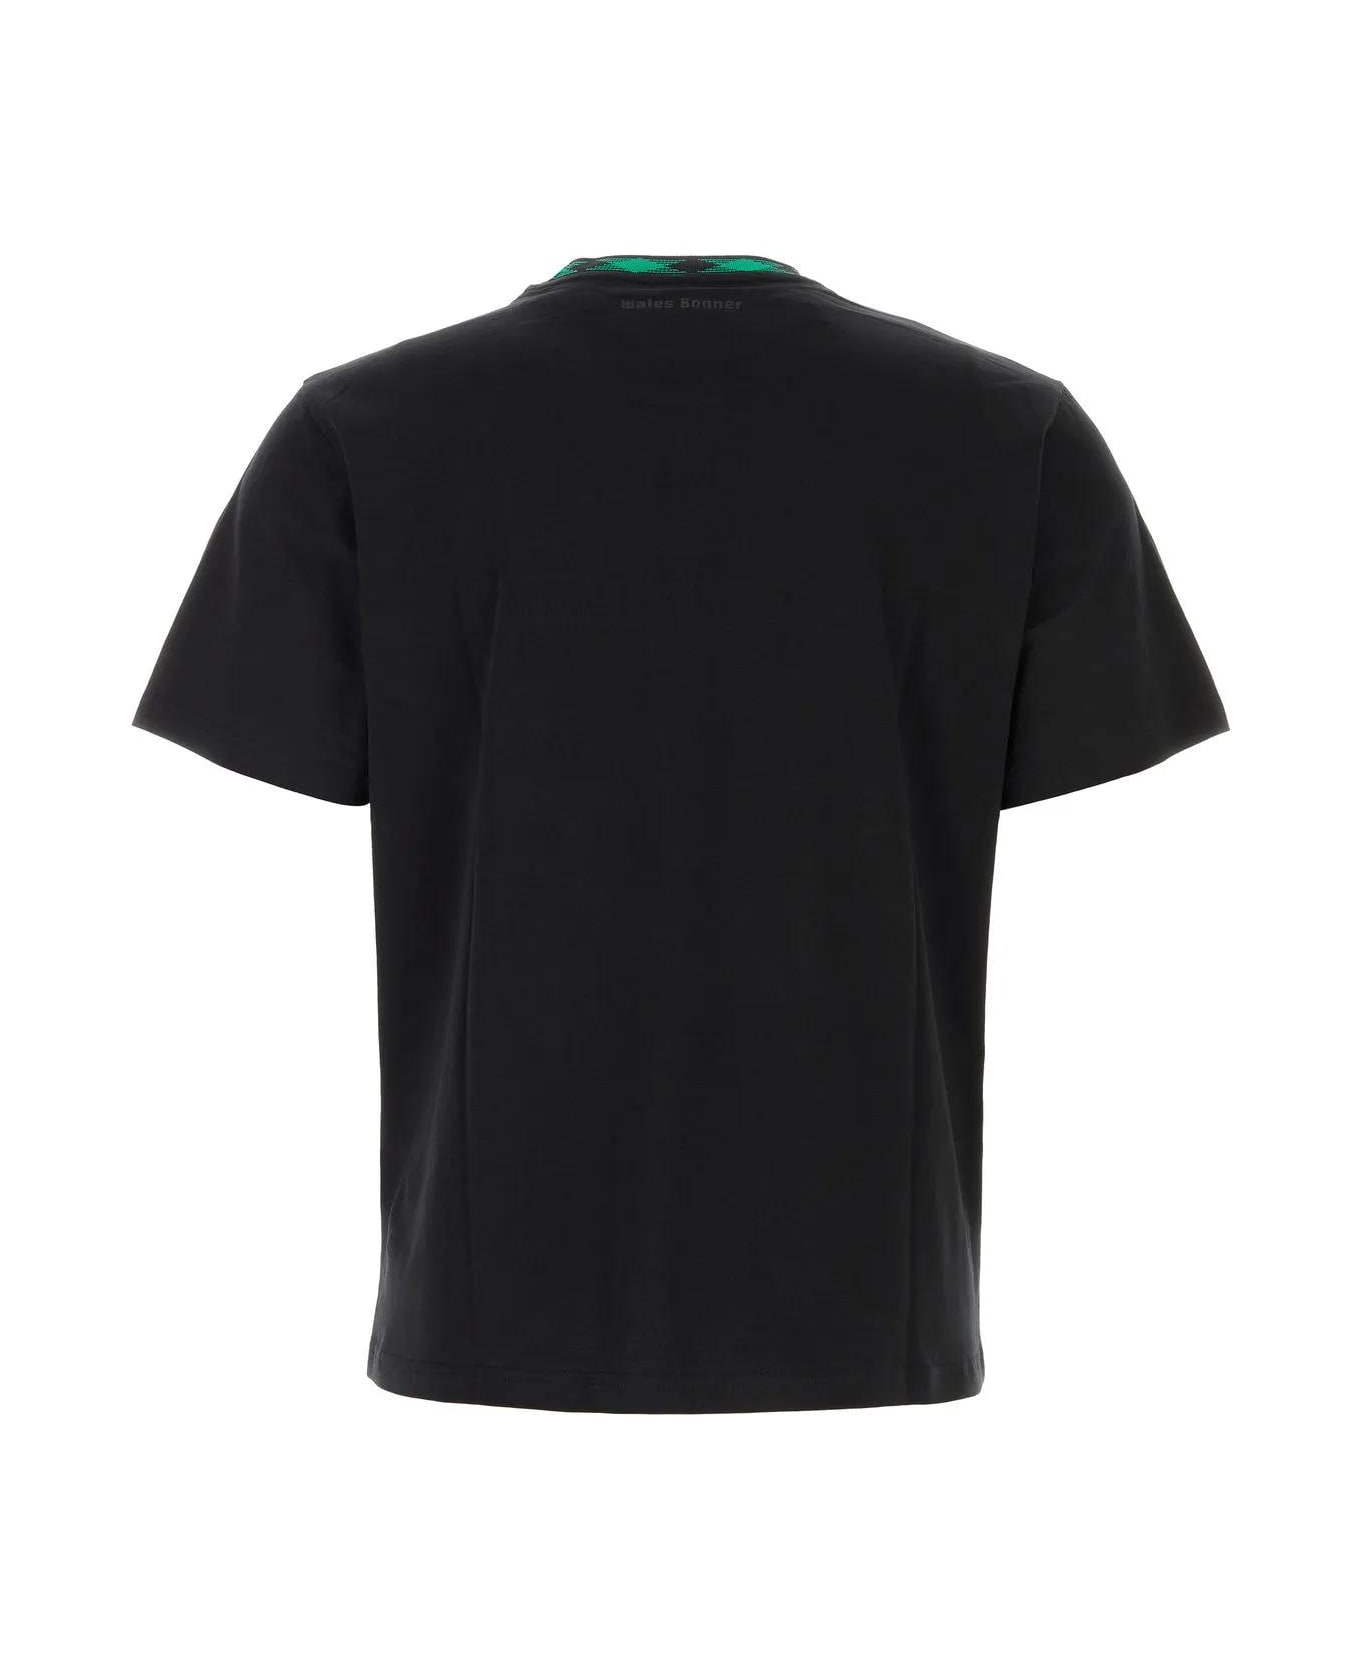 Wales Bonner Black Cotton Original T-shirt - Black シャツ